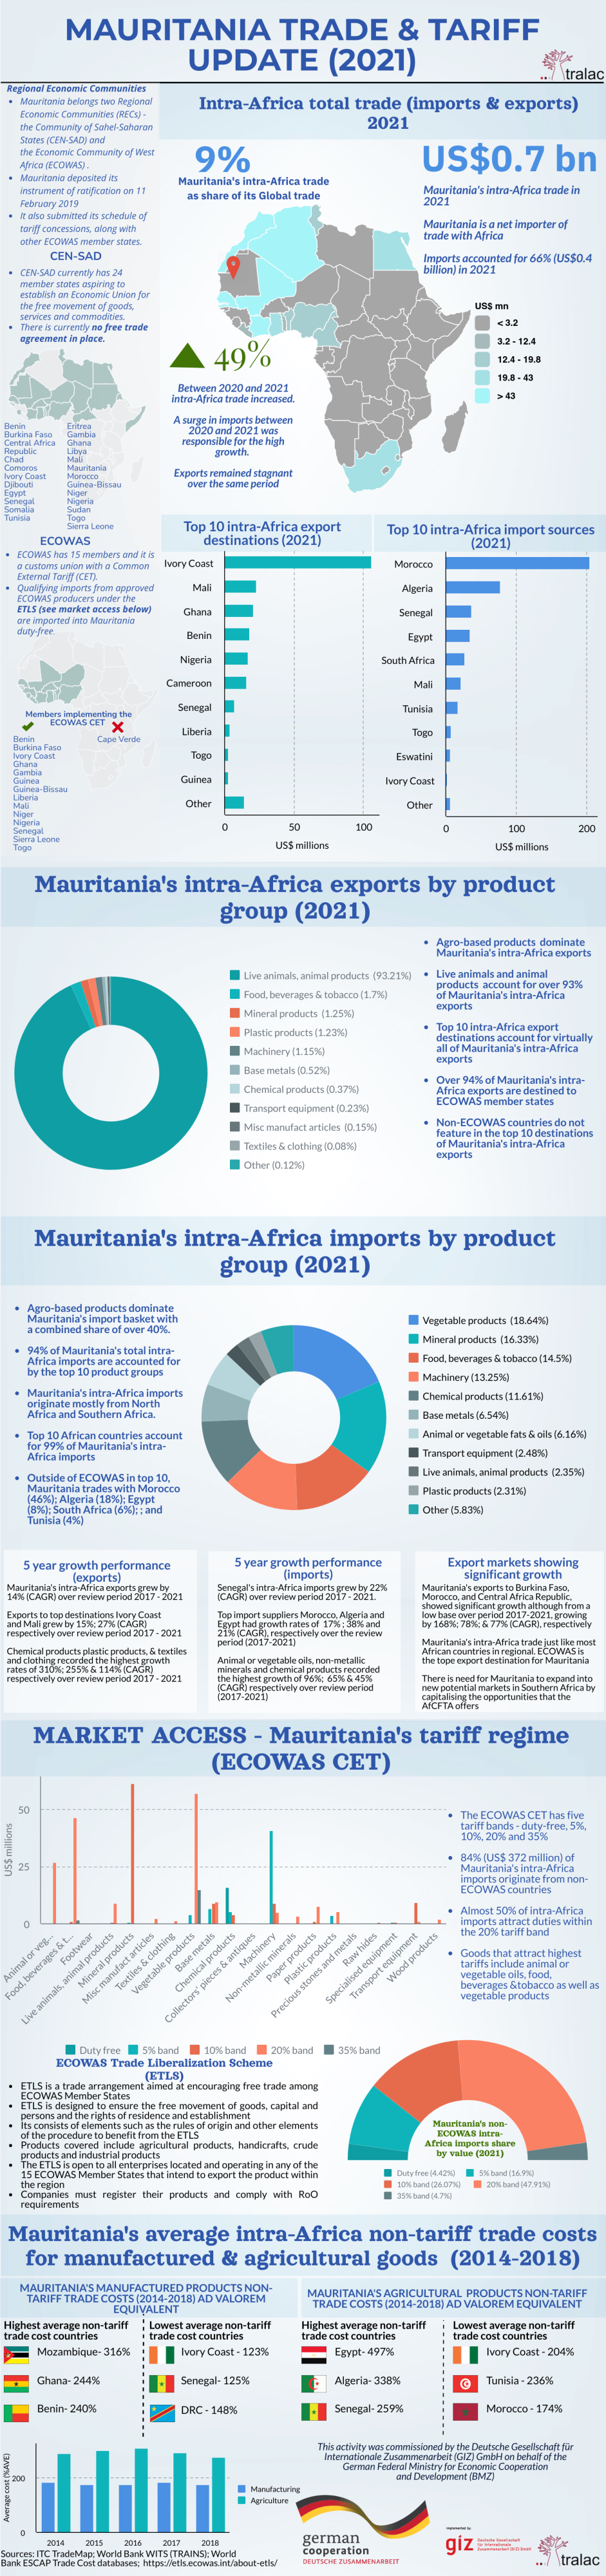 Mauritania trade and tariff update 2021